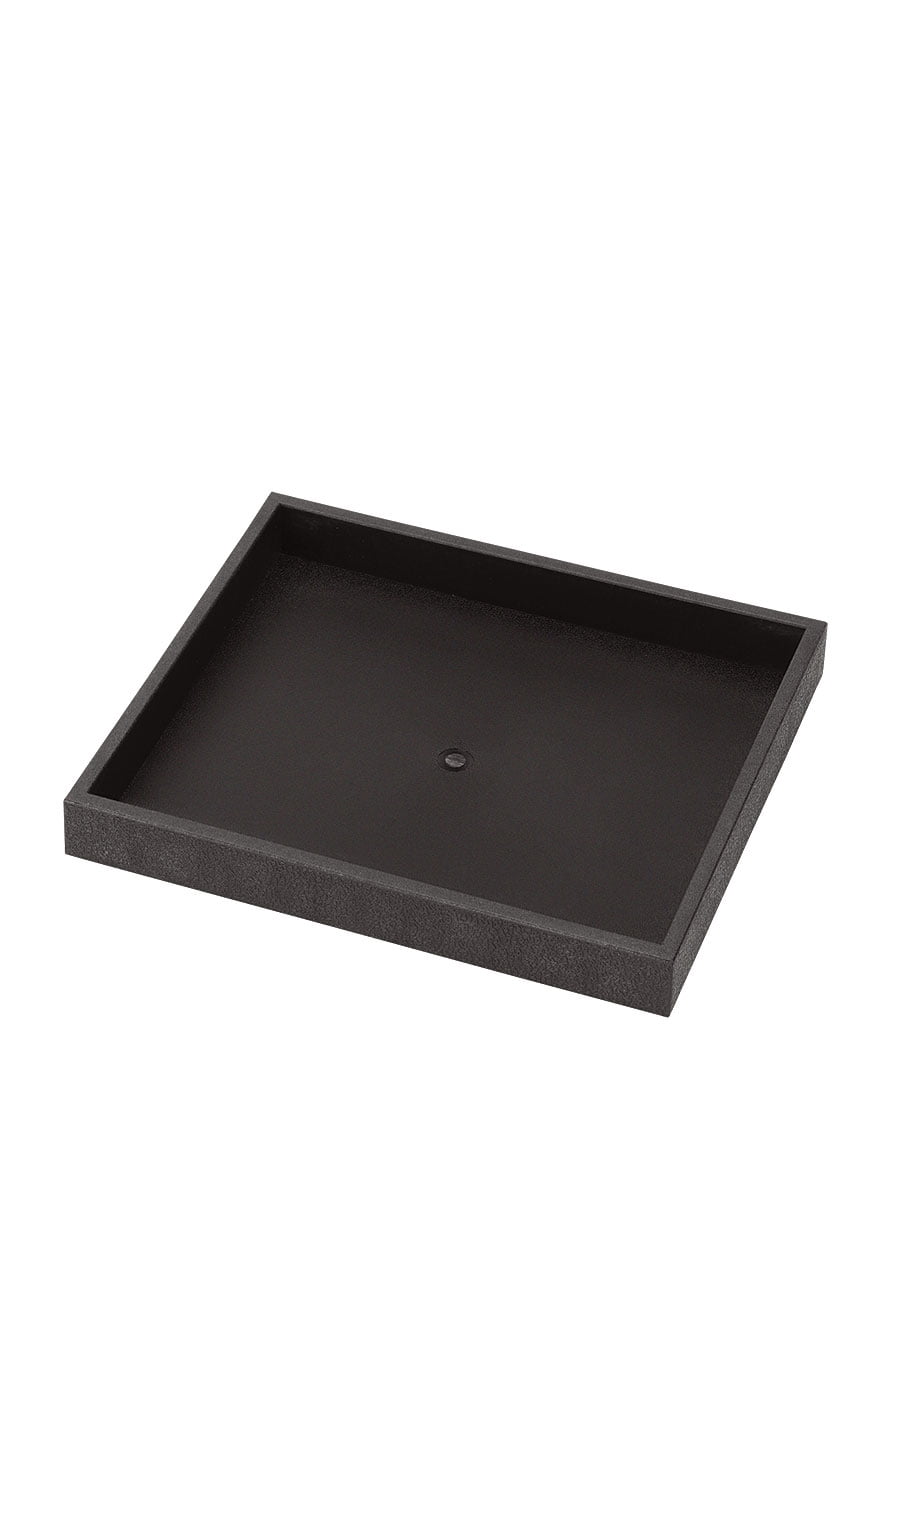 3 Black ABS Plastic Multi-Purpose Storage Trays/Drain Pans/Container 18"x14"x2" 